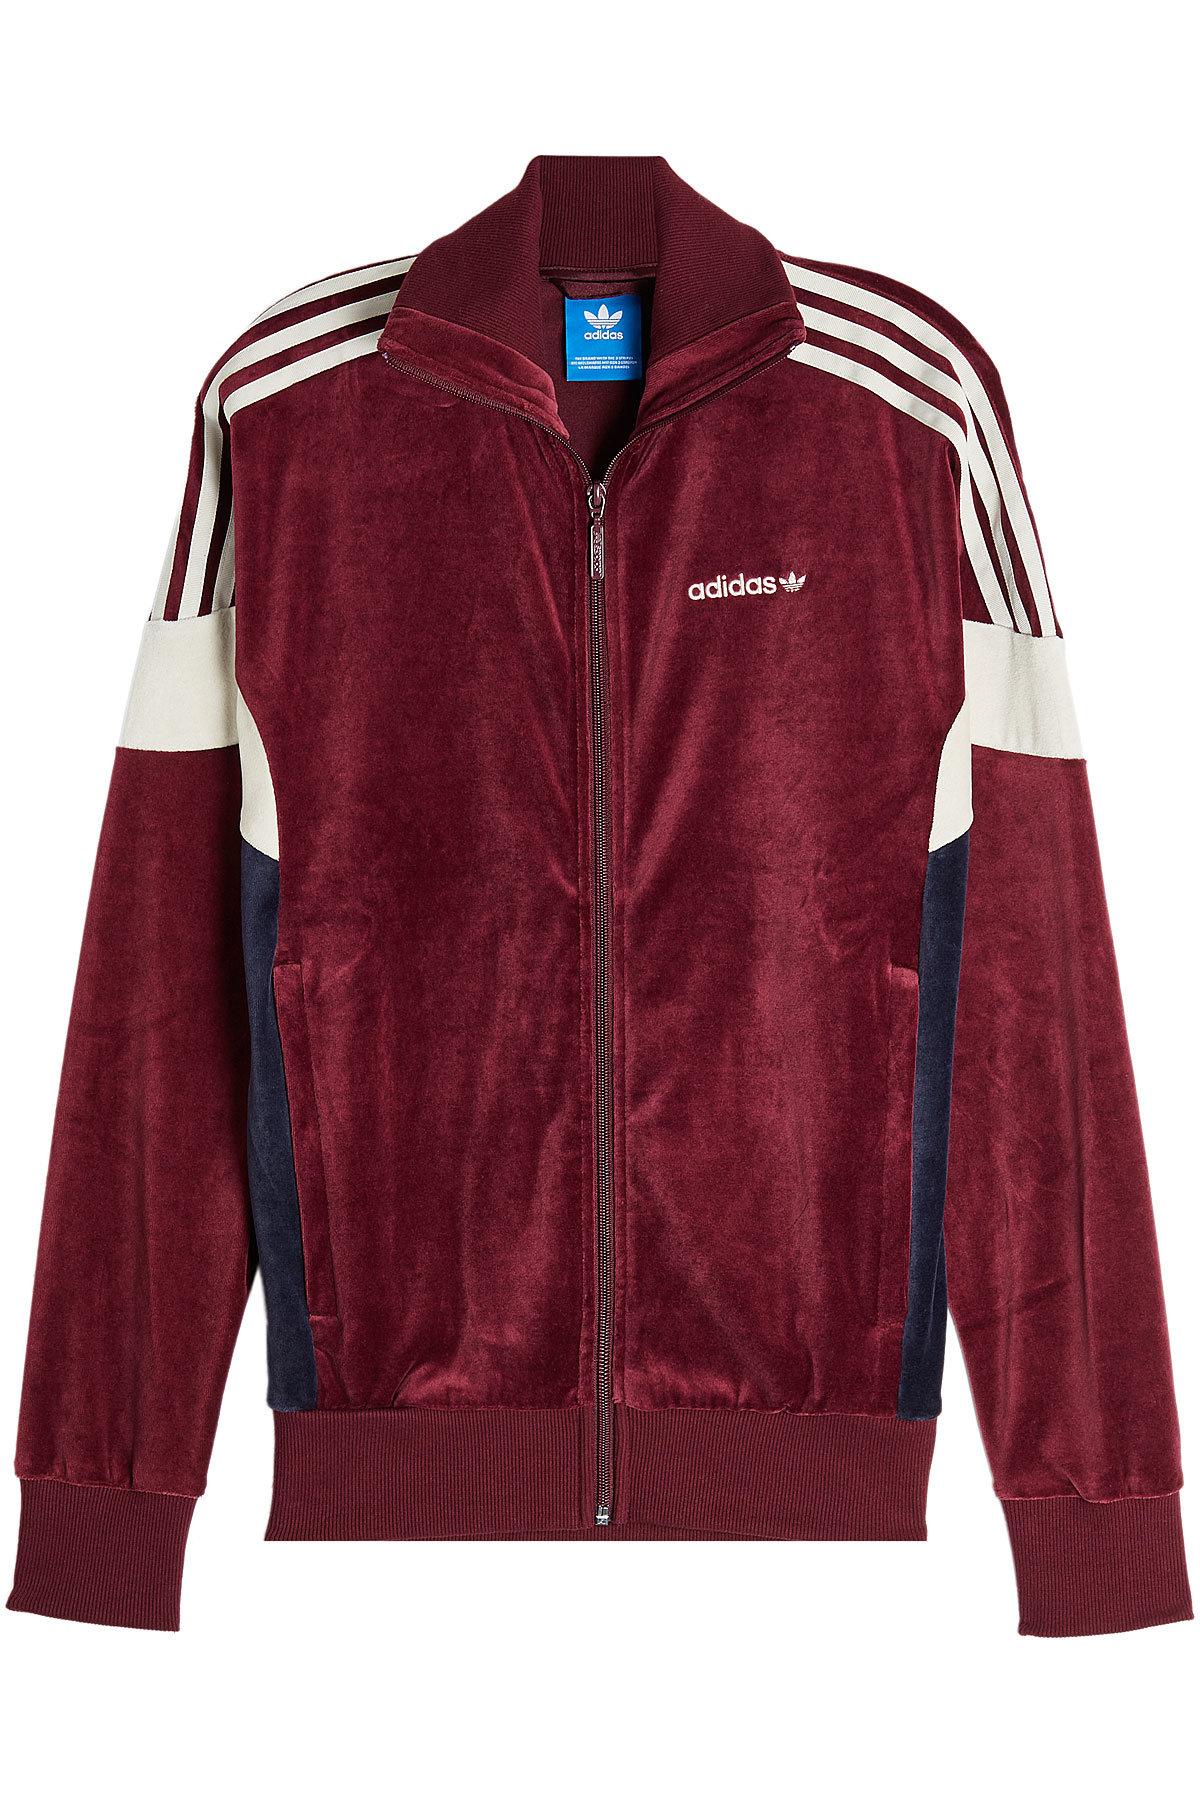 Lyst - Adidas Originals Velour Track Jacket in Red for Men